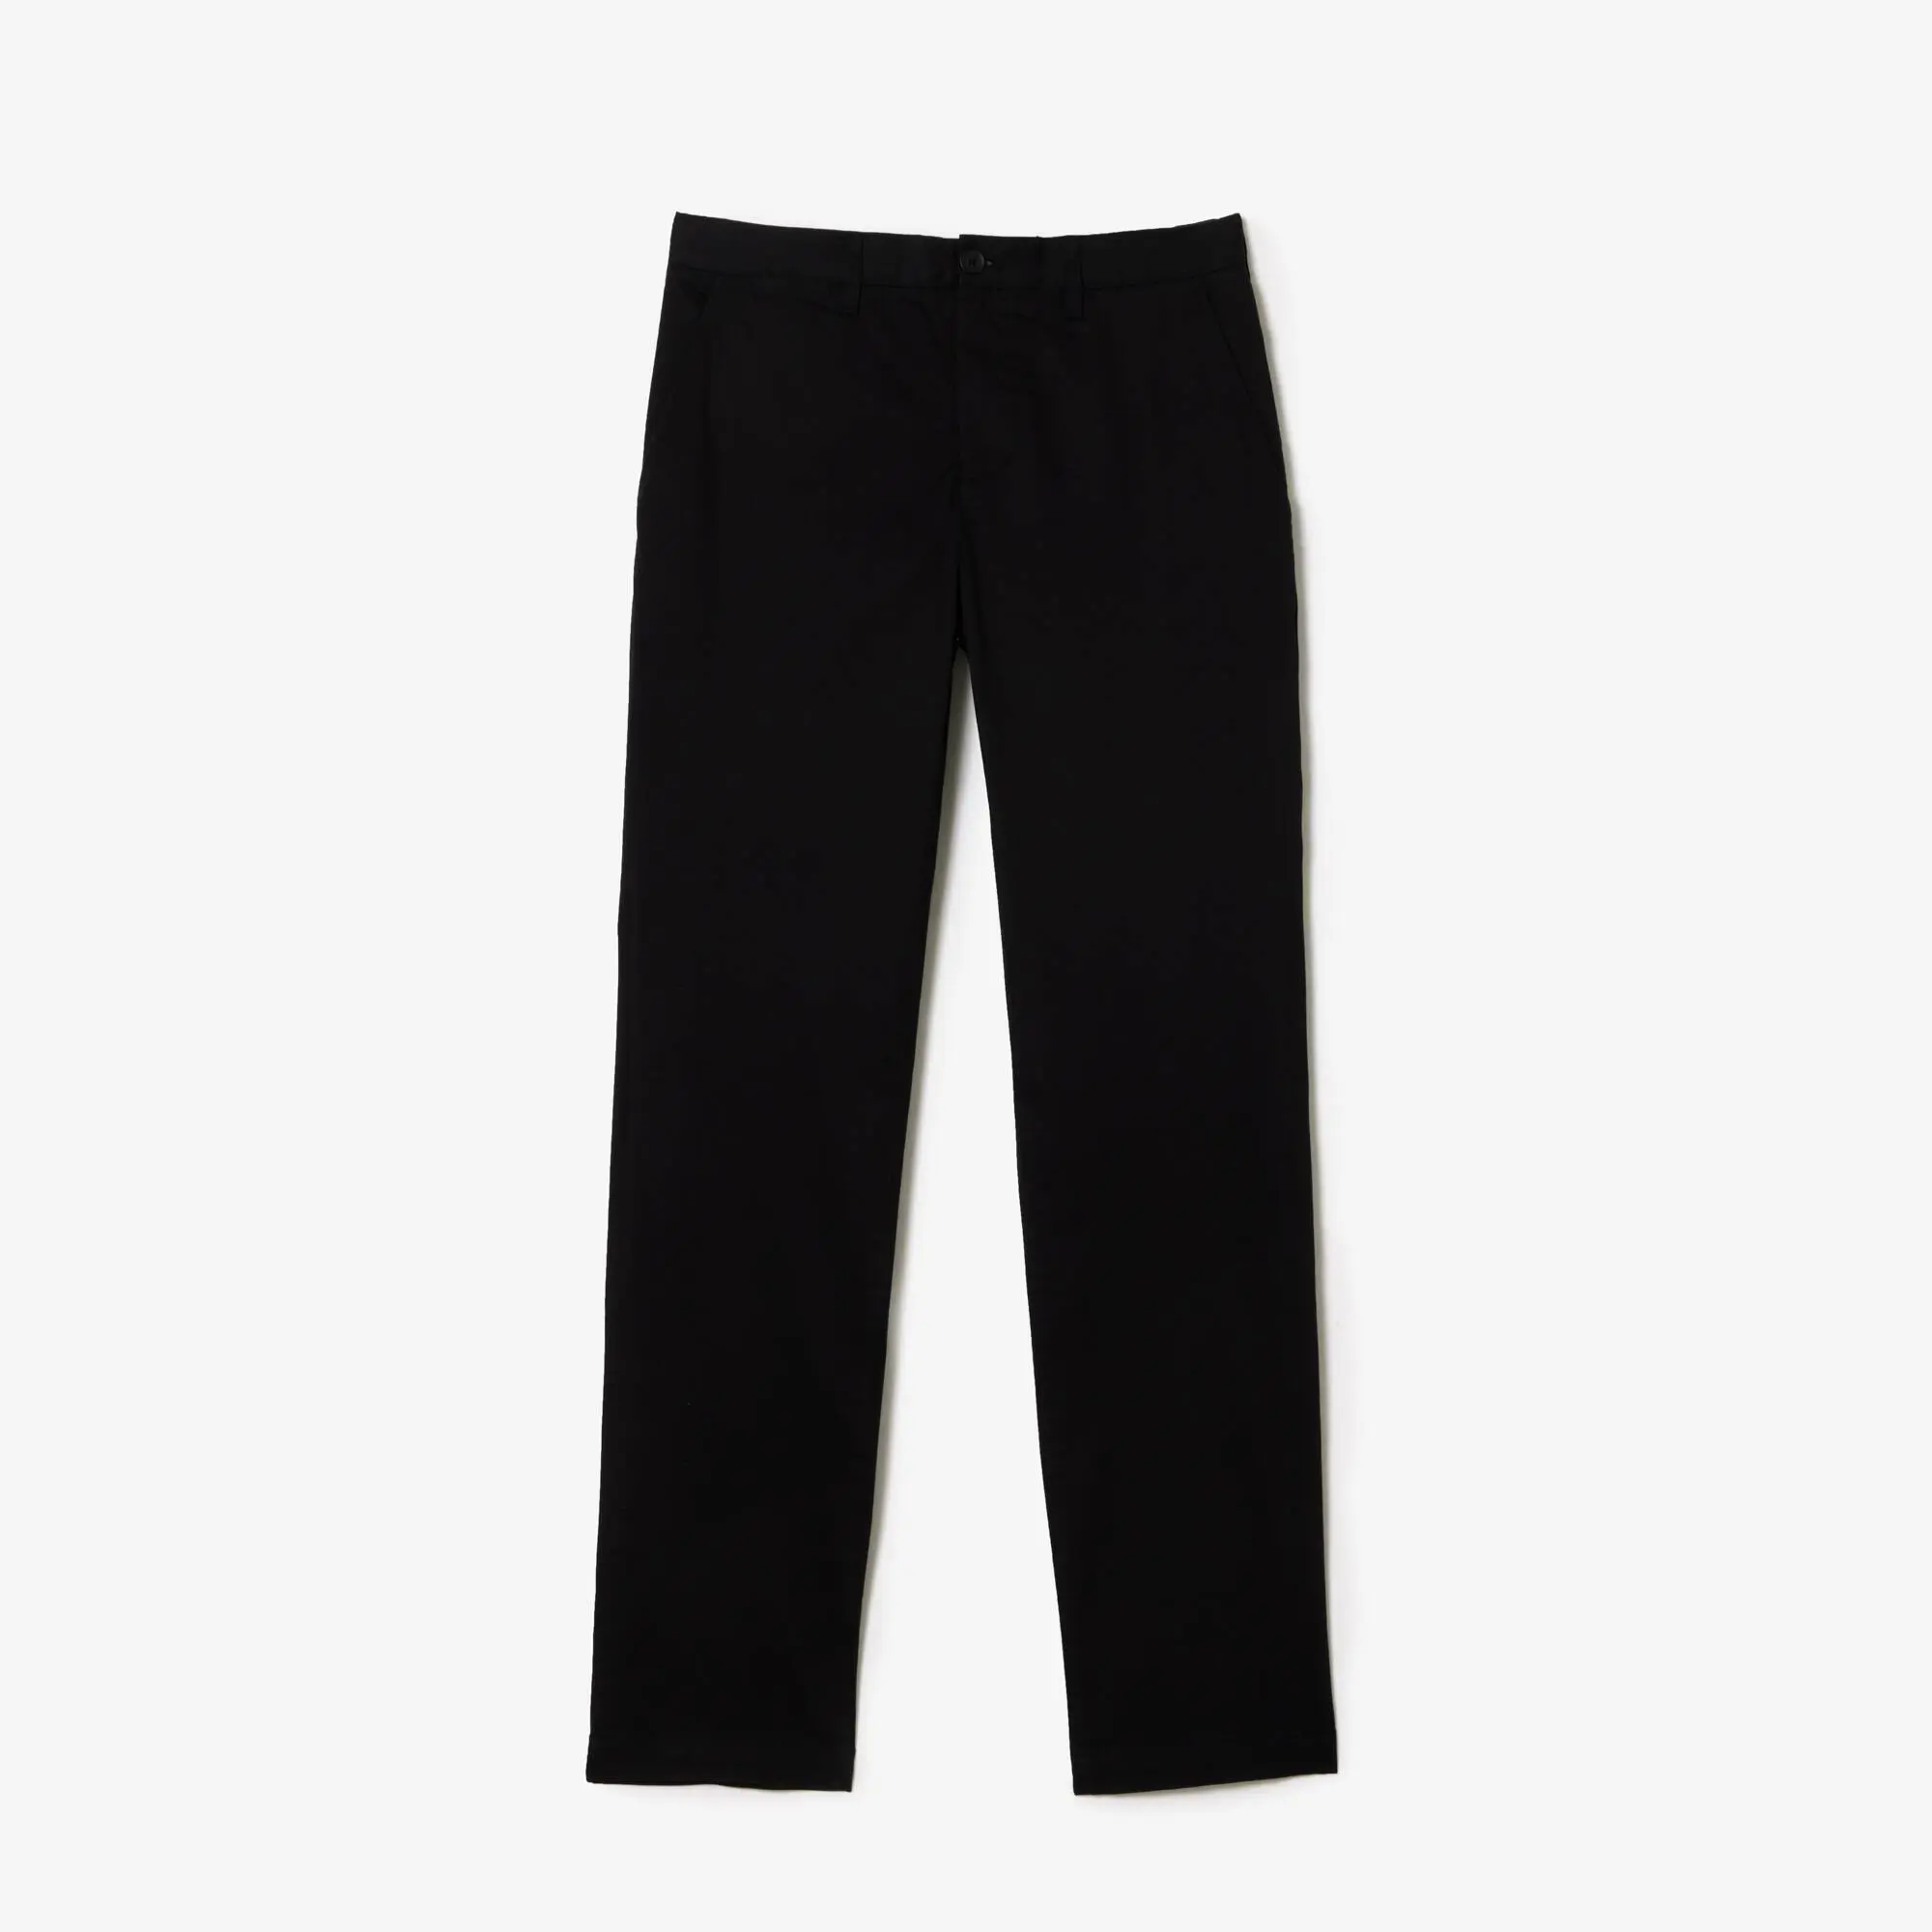 Lacoste Men's New Classic Slim Fit Stretch Cotton Trousers. 2